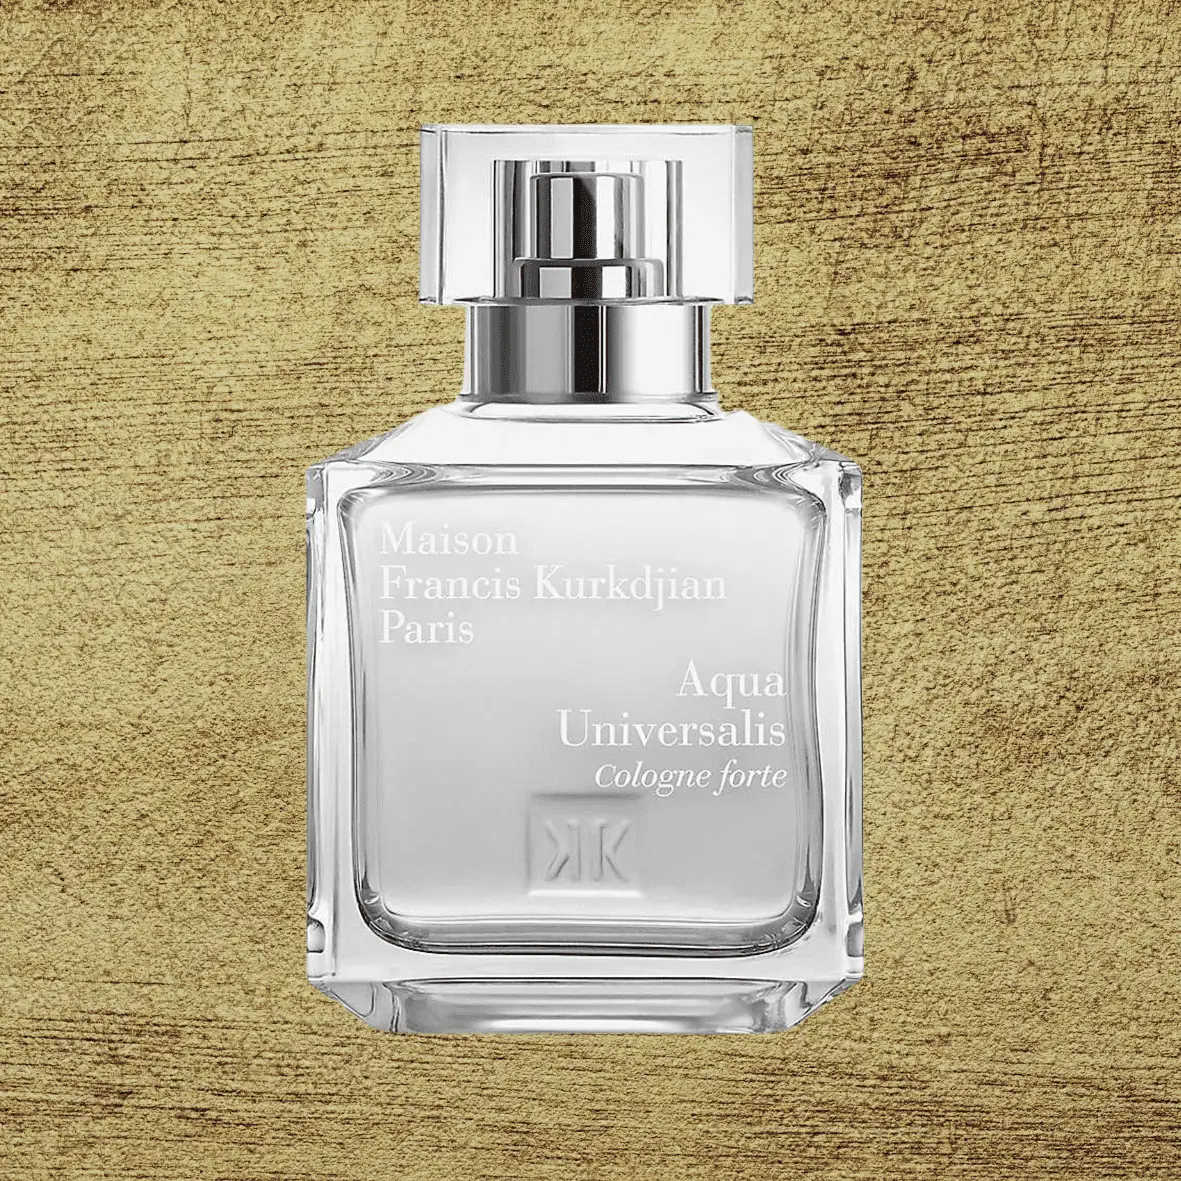 Best Bergamot Fragrances For Men & Women
Maison Francis Kurkdjian Aqua Universalis Cologne Forte